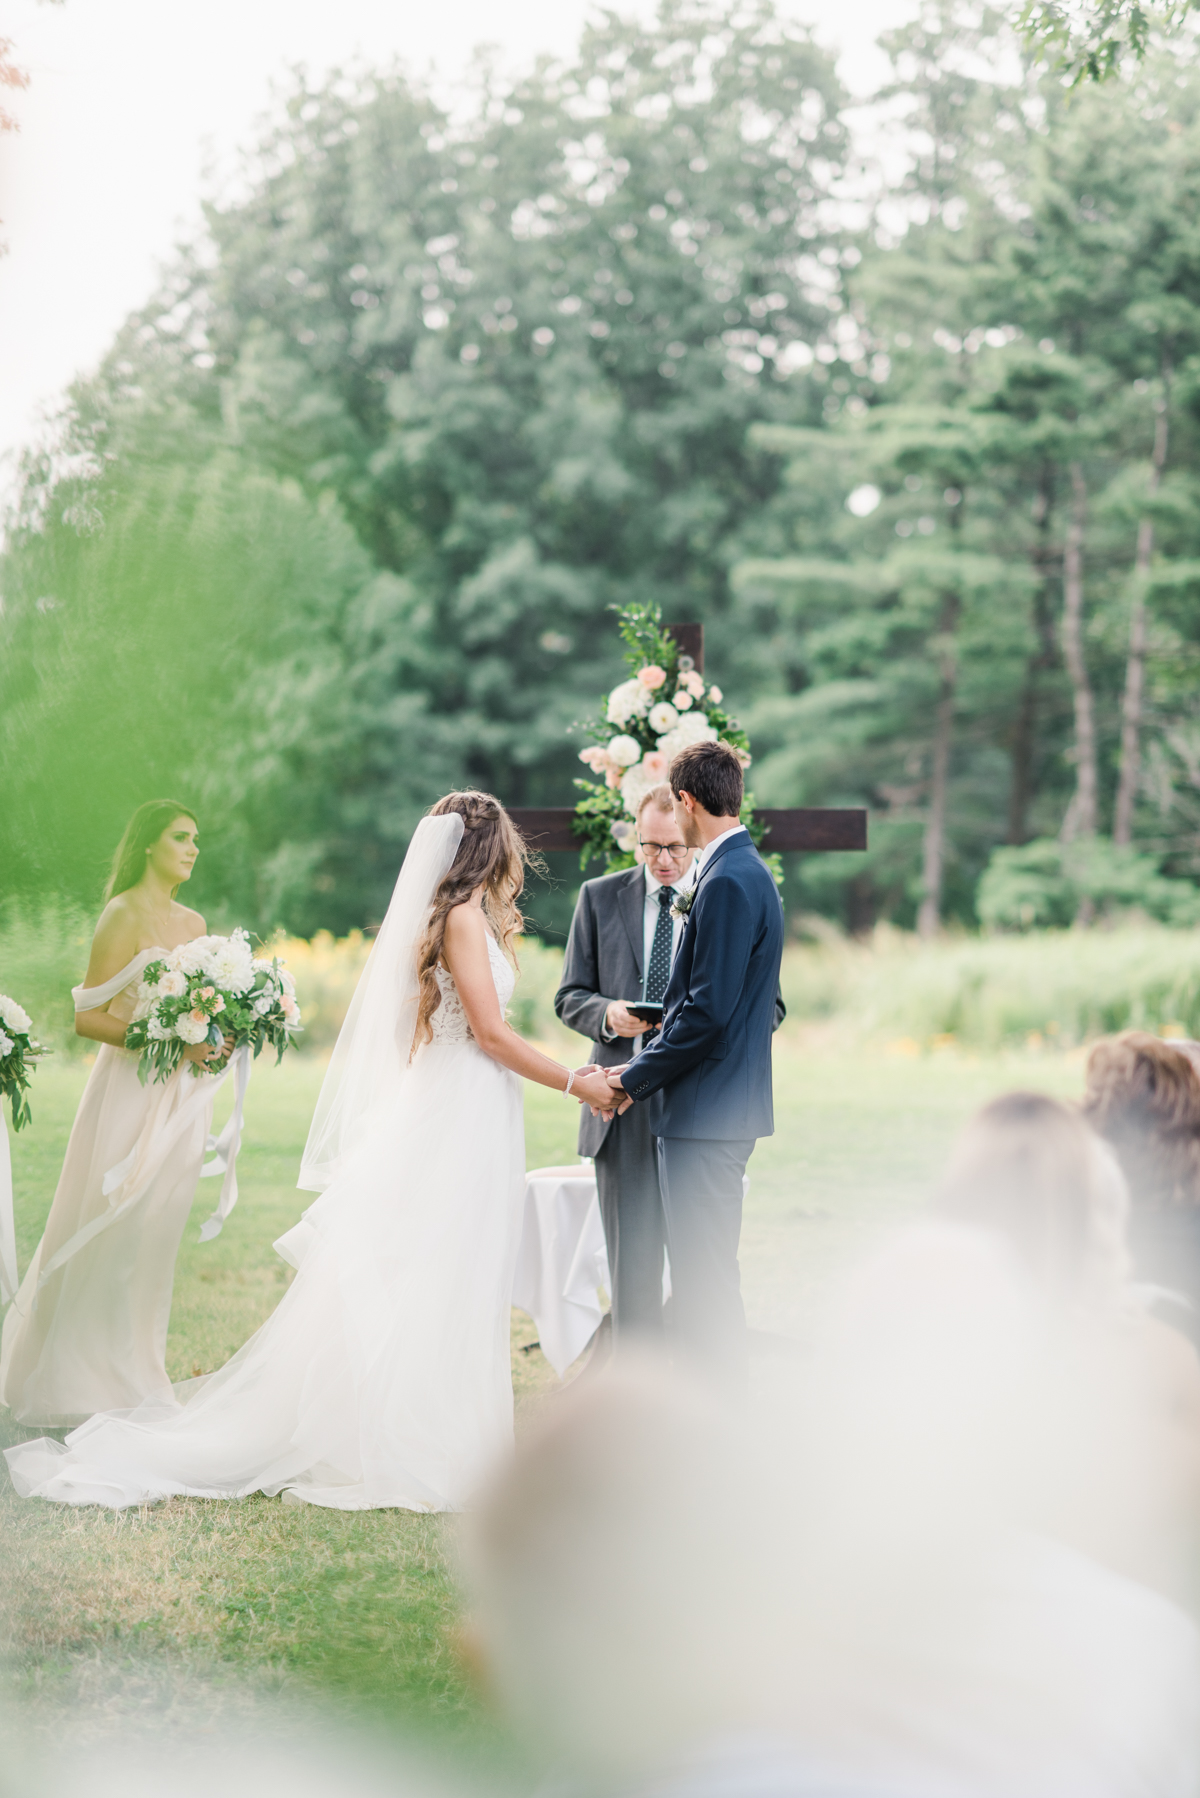 acacia ballroom wedding, cleveland wedding, blush garden wedding, wedding ceremony, outdoor wedding ceremony, ceremony decor